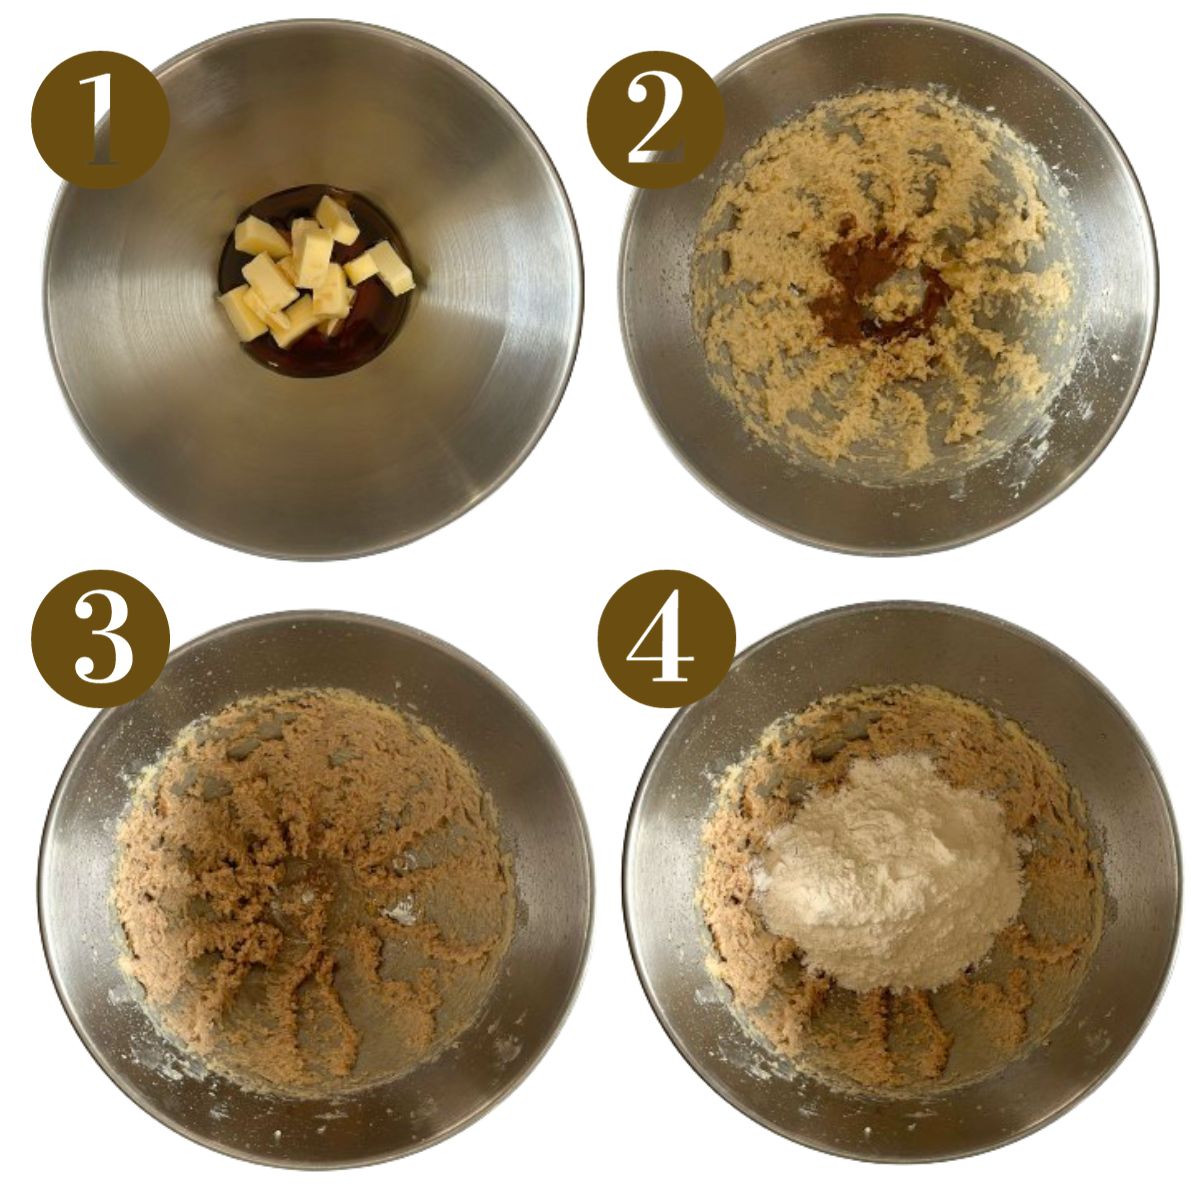 Steps to make homemade animal crackers.